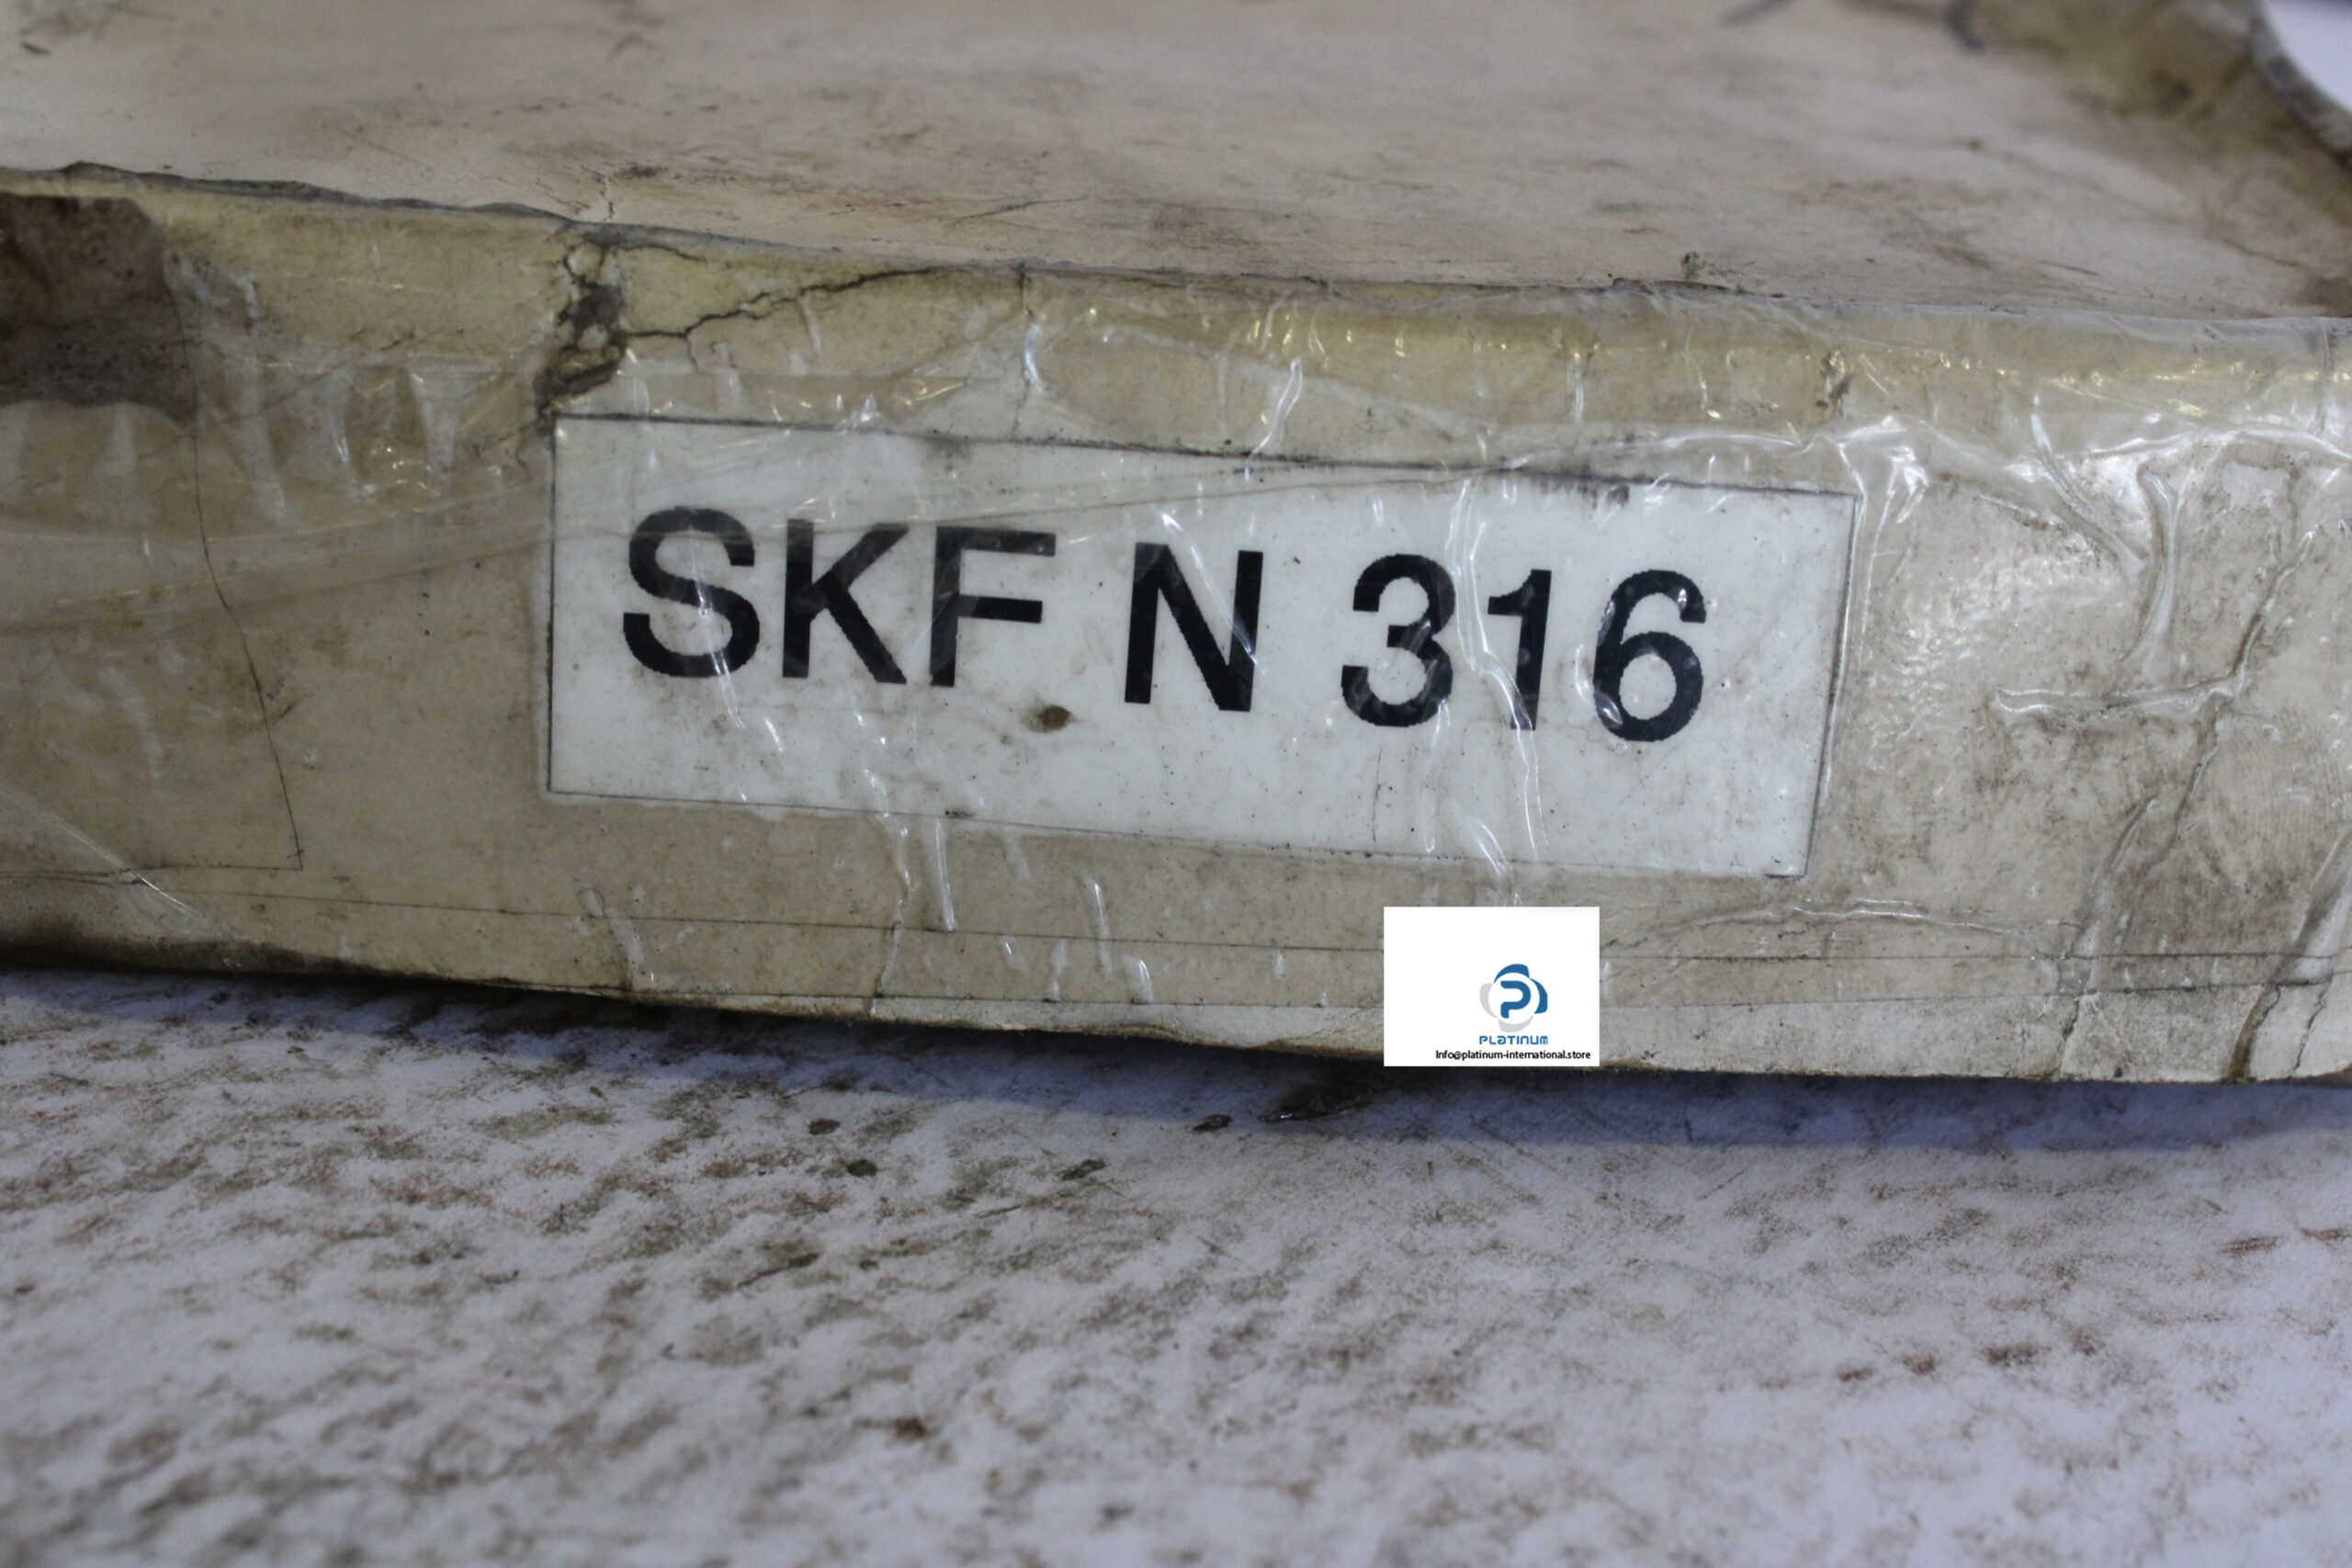 skf-N-316-cylindrical-roller-bearing-(new)-(carton)-1